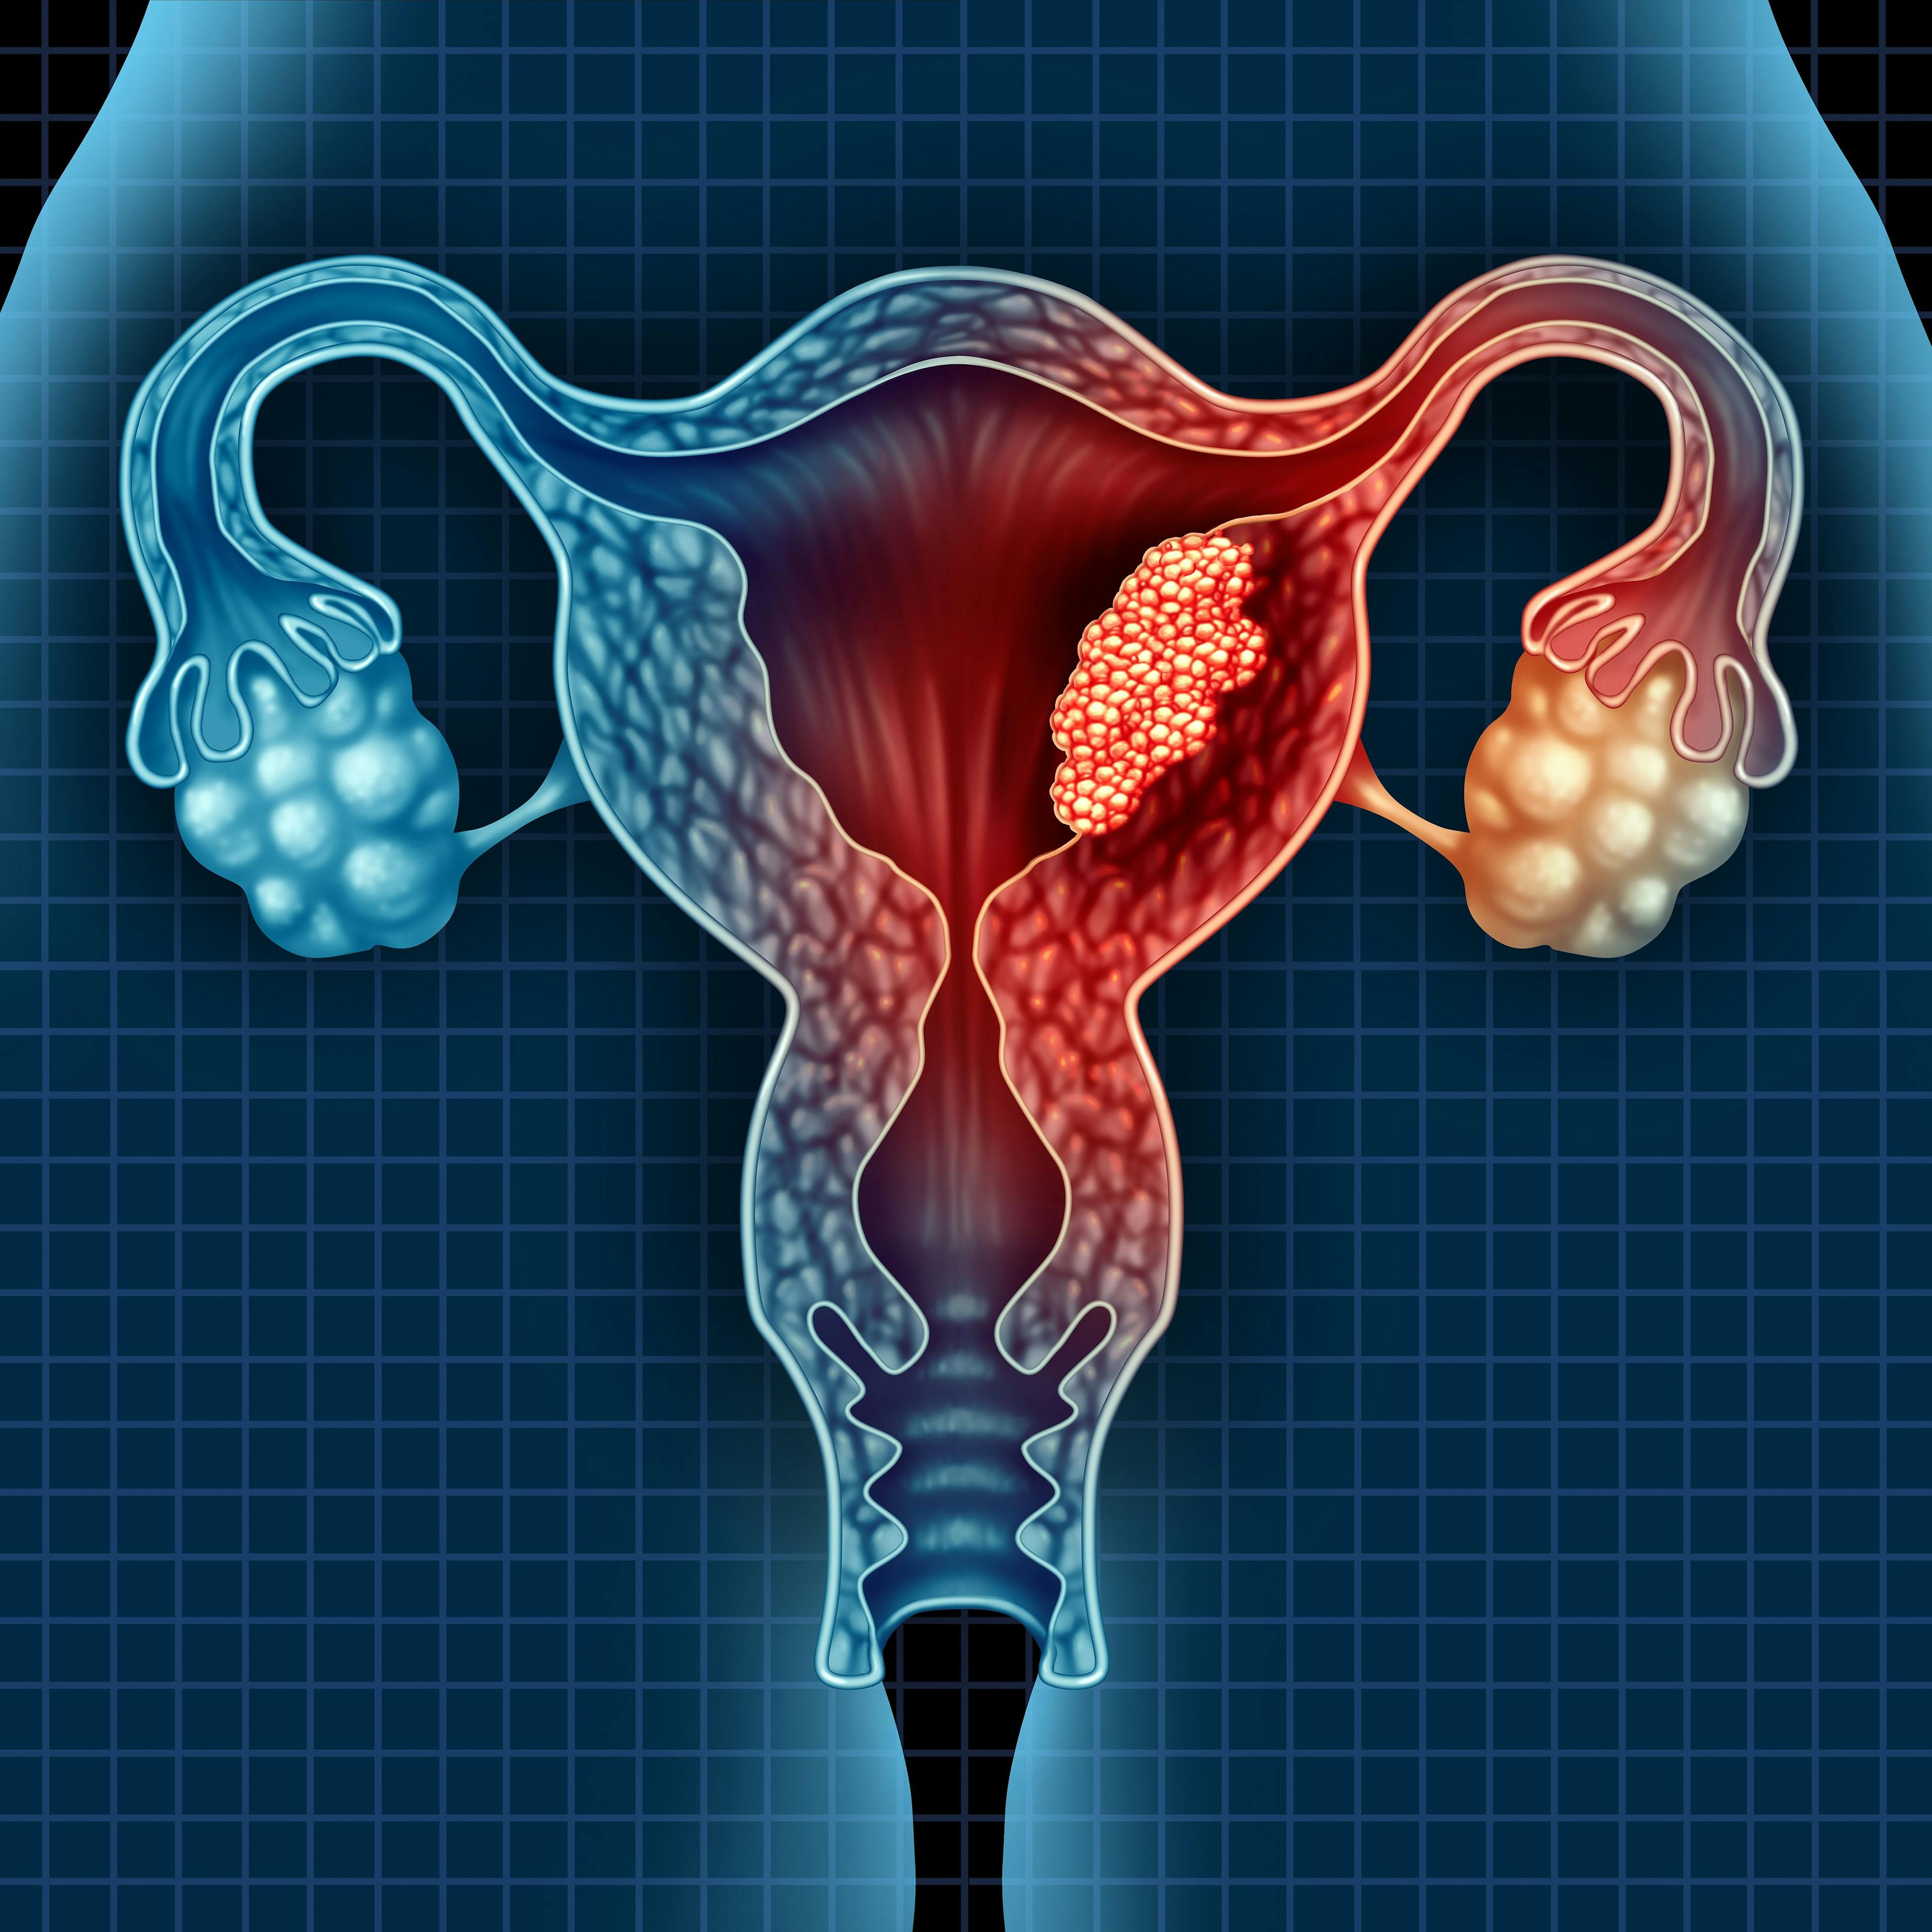 Uterus Cancer: © freshidea - stock.adobe.com